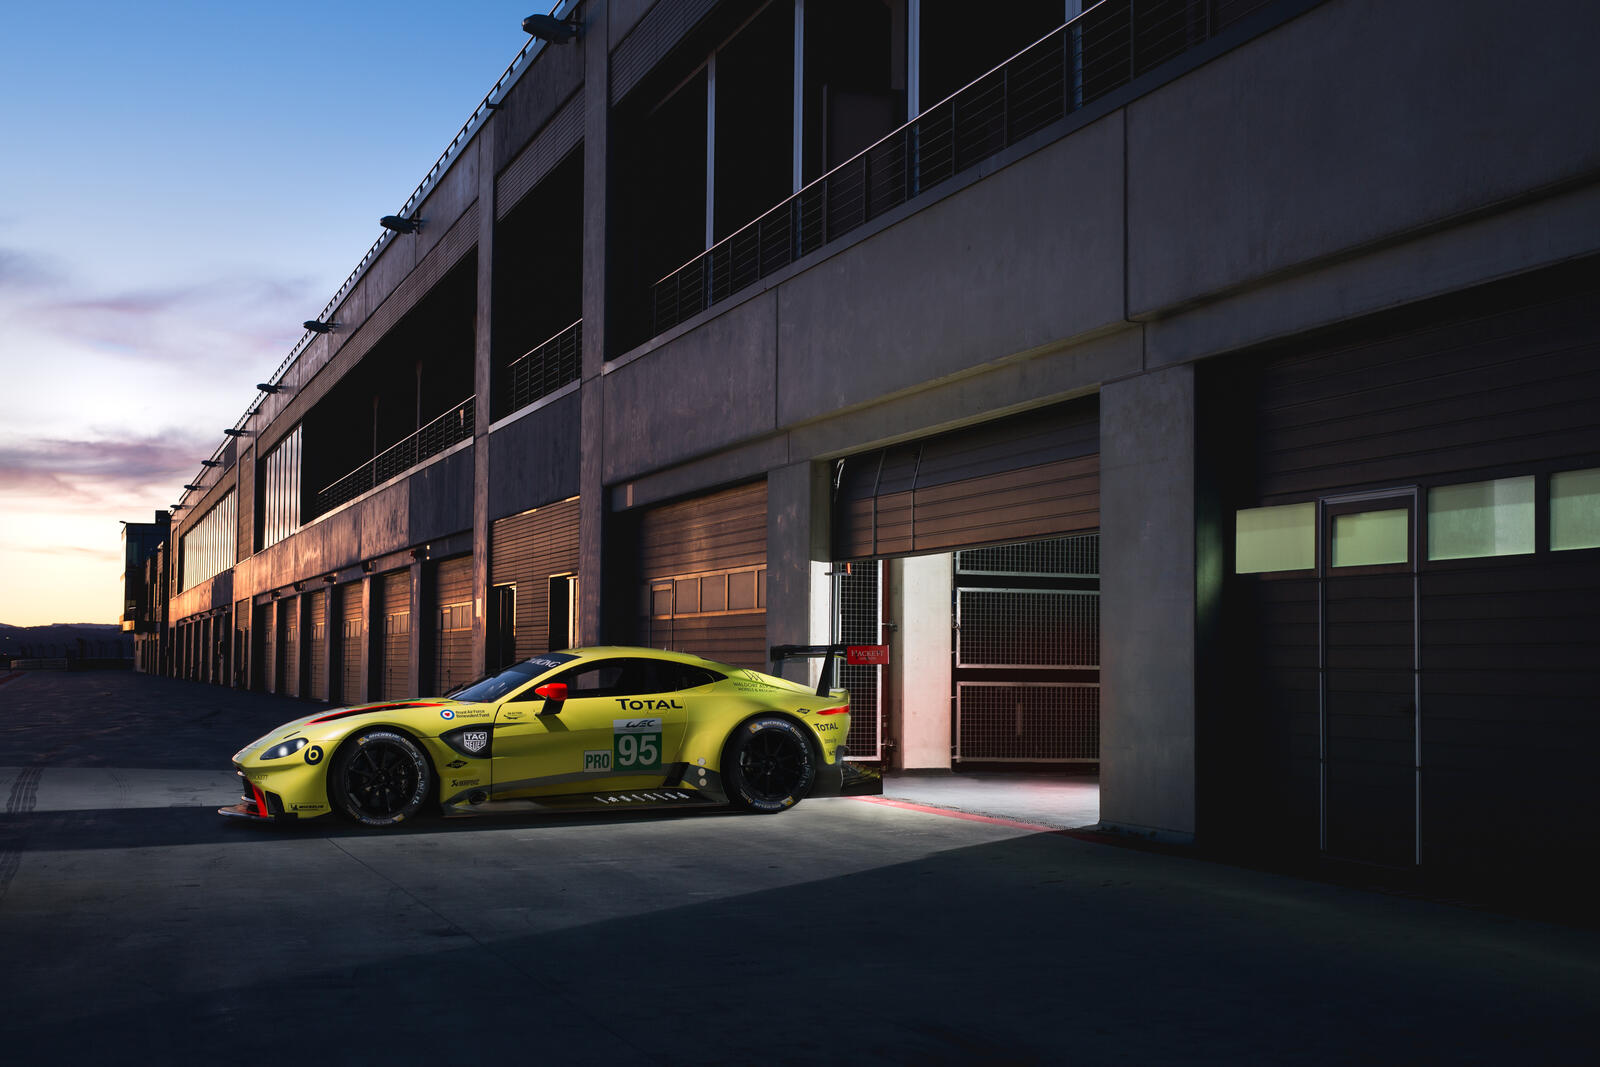 Free photo Aston Martin Vantage yellow standing by the garage